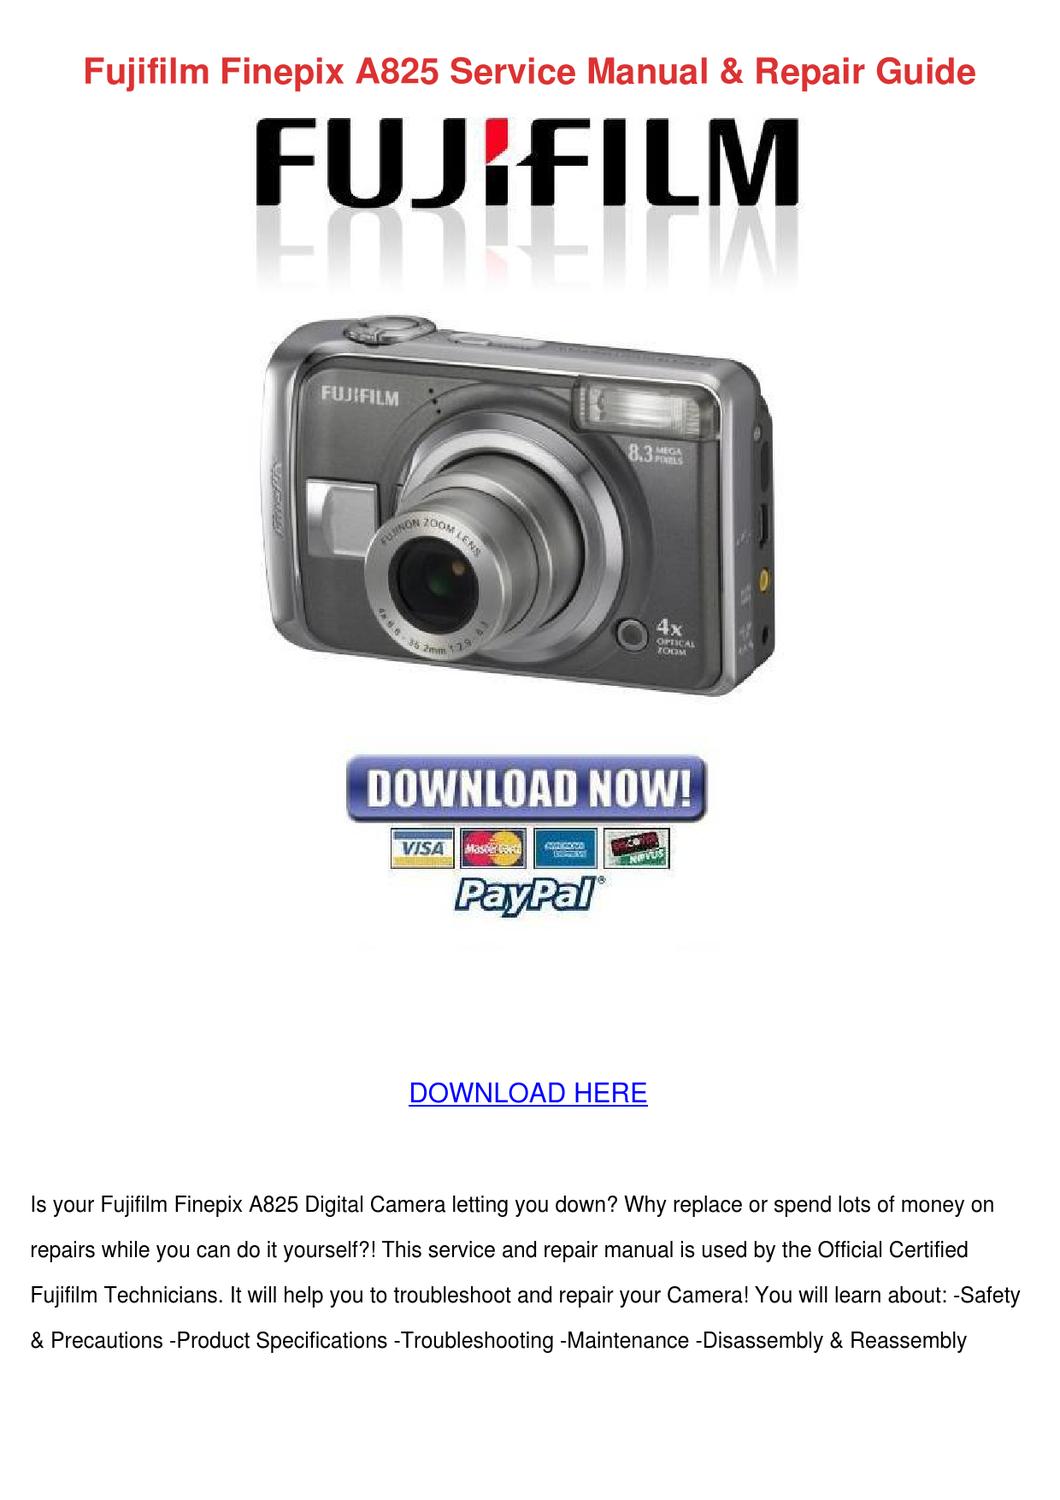 Fujifilm finepix s manual pdf